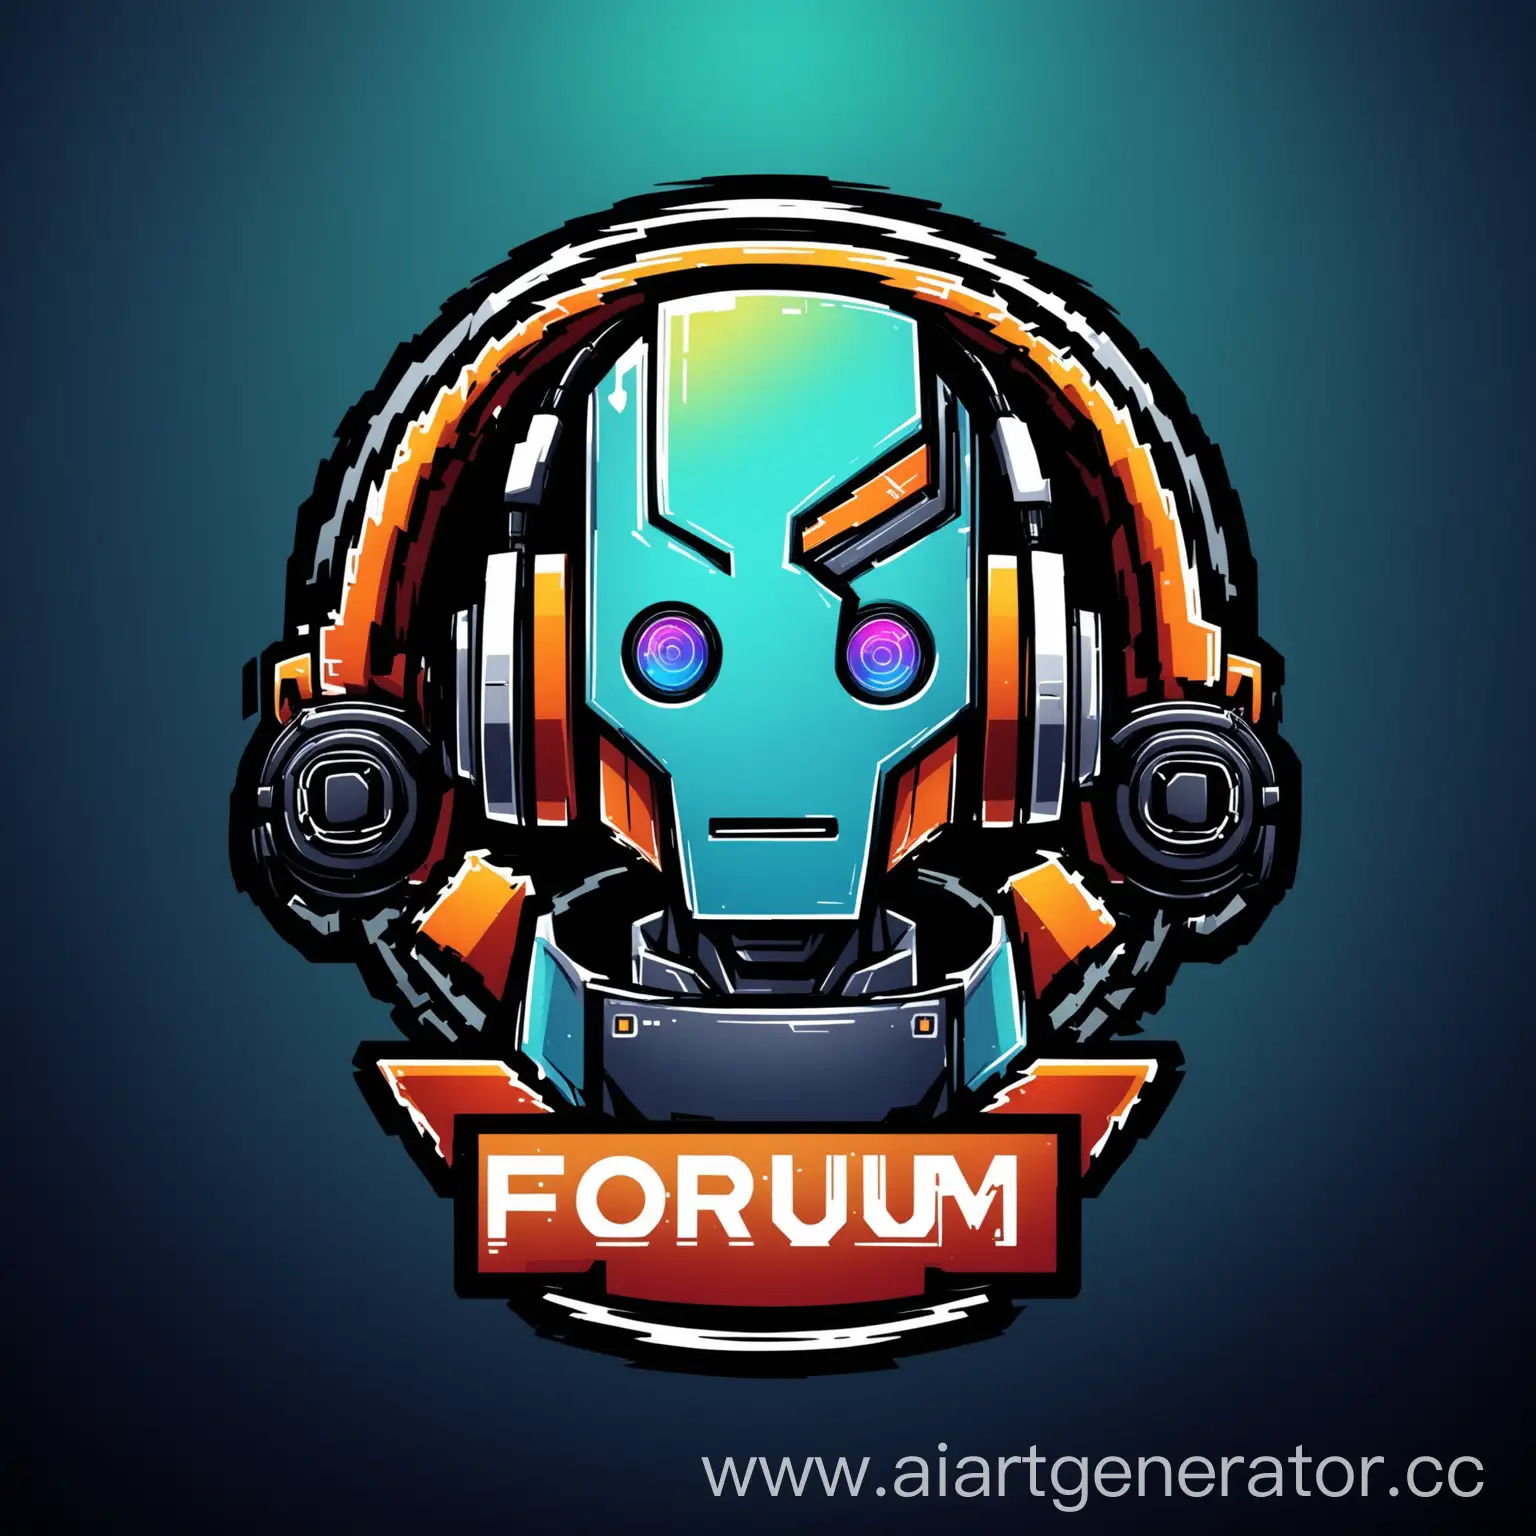 Futuristic-Robot-Head-Wearing-Headphones-for-Gaming-Forum-Logo